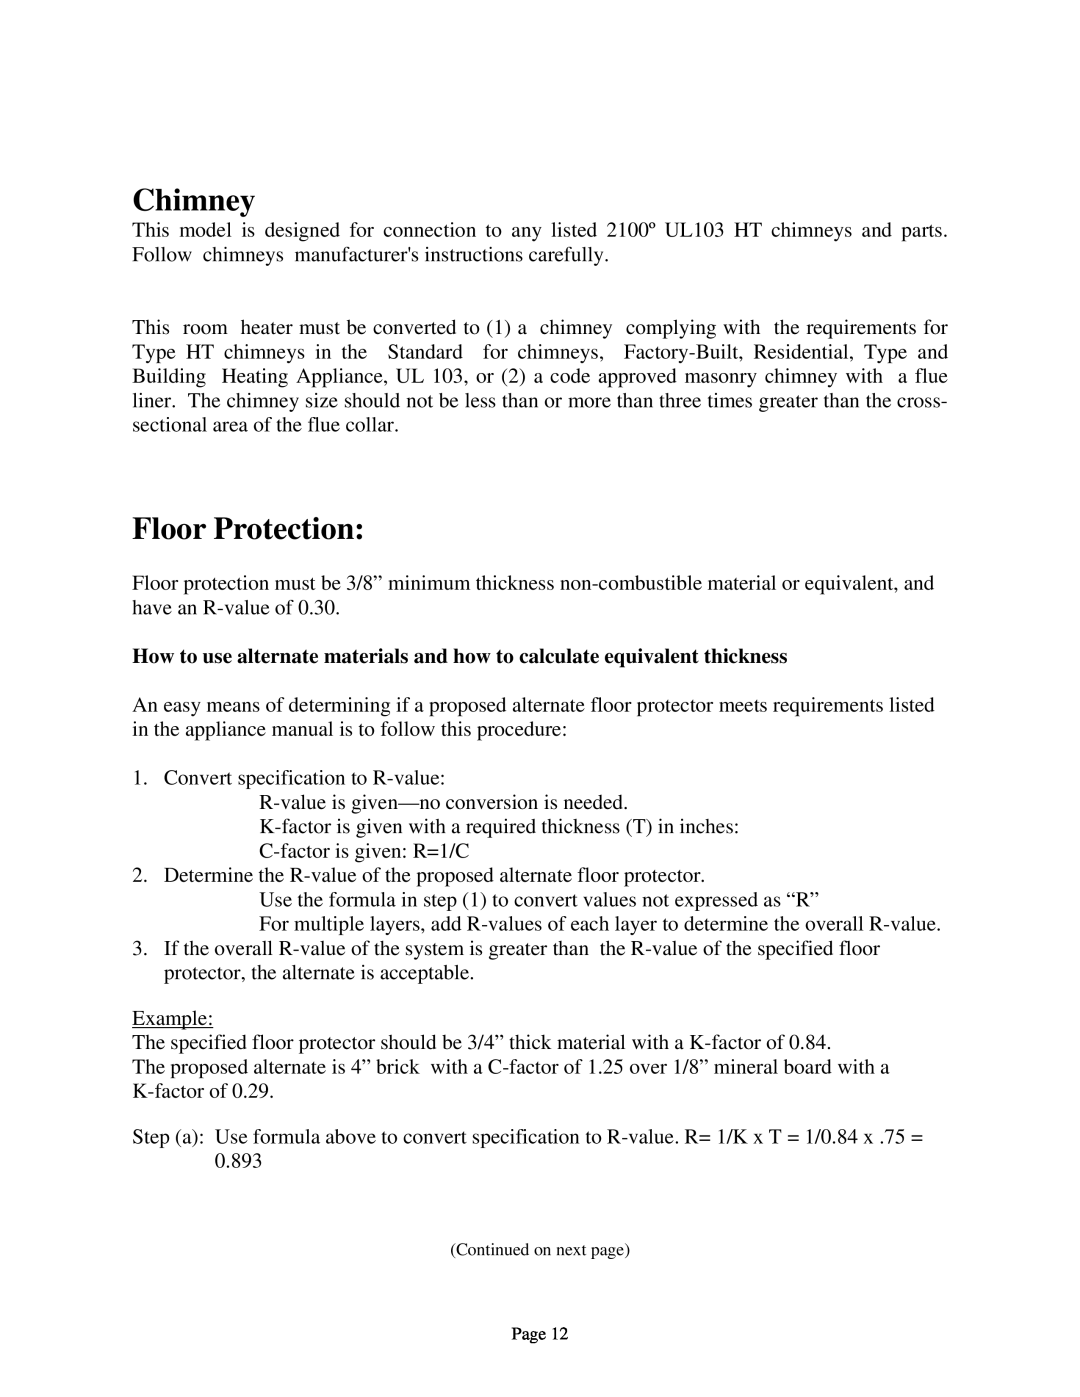 New Buck Corporation 94NC installation instructions Chimney, Floor Protection 